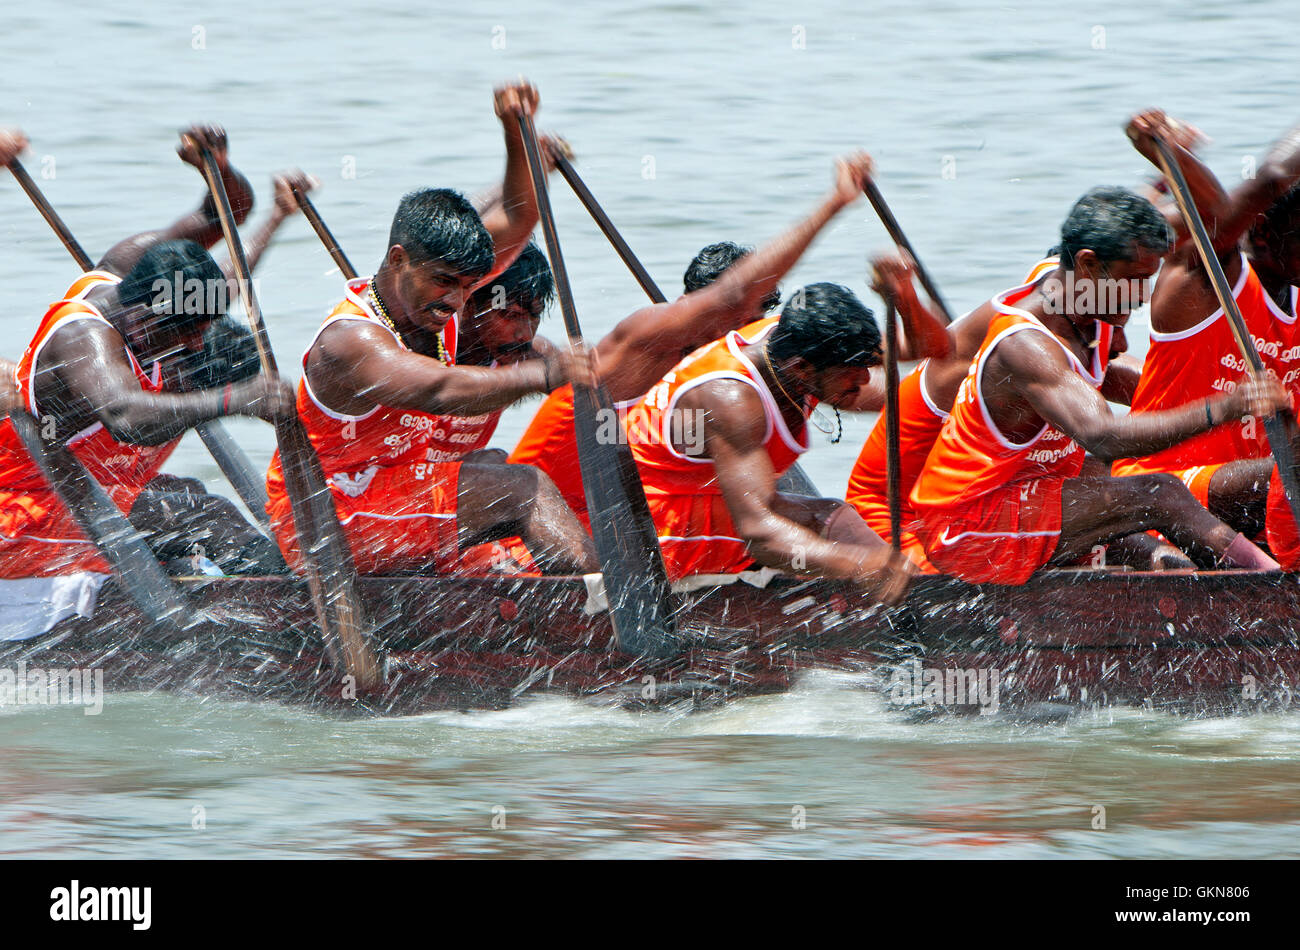 The image of Snake boat in motion, Nehru boat race day, Allaepy, Punnamda Lake, Kerala India Stock Photo